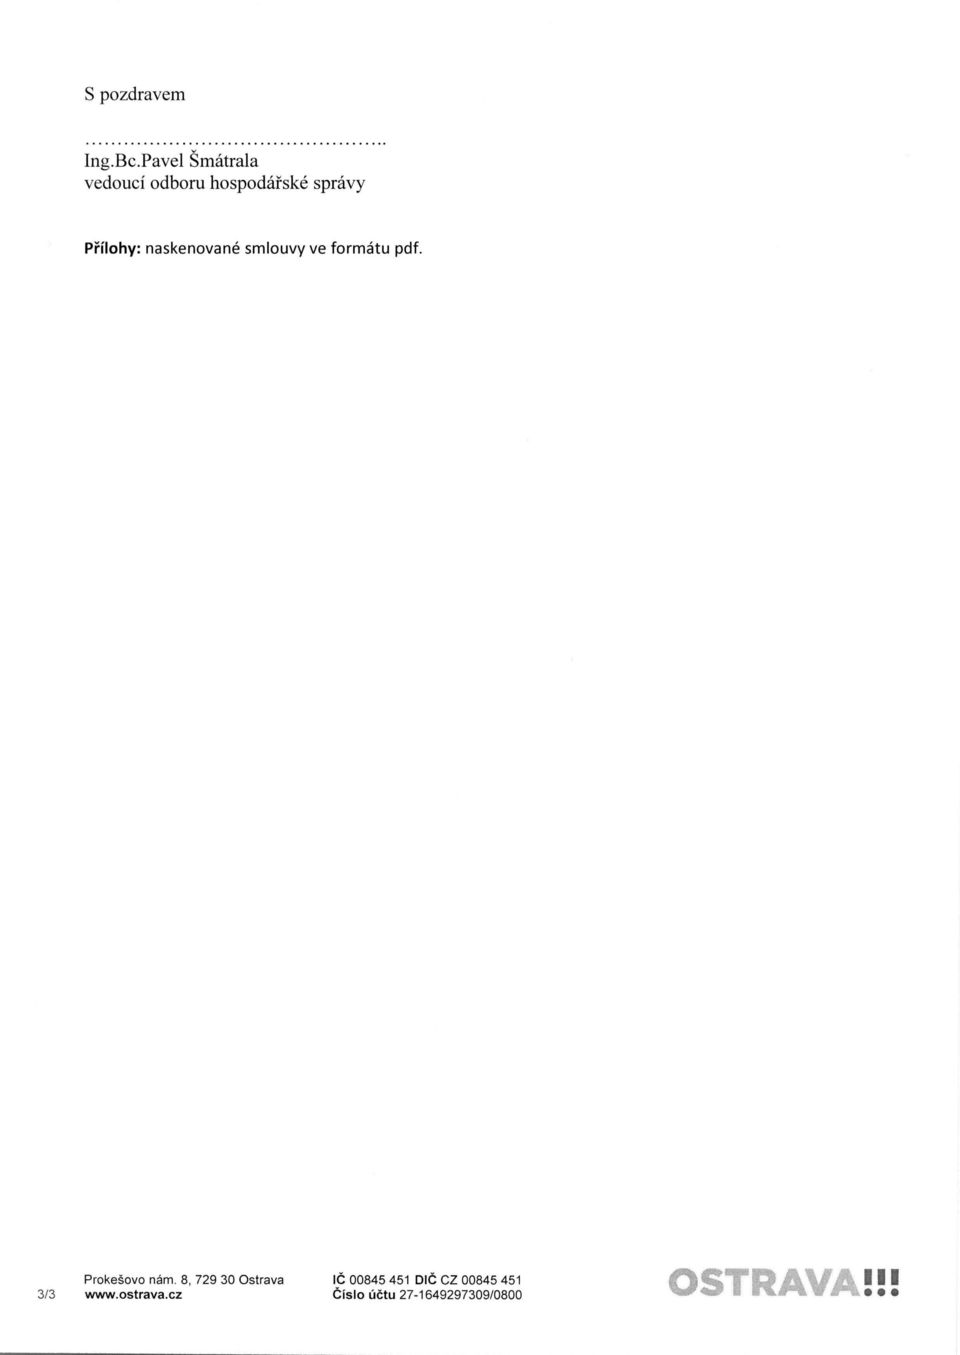 P"rilohy: naskenovane smlouvy ve formatu pdf.